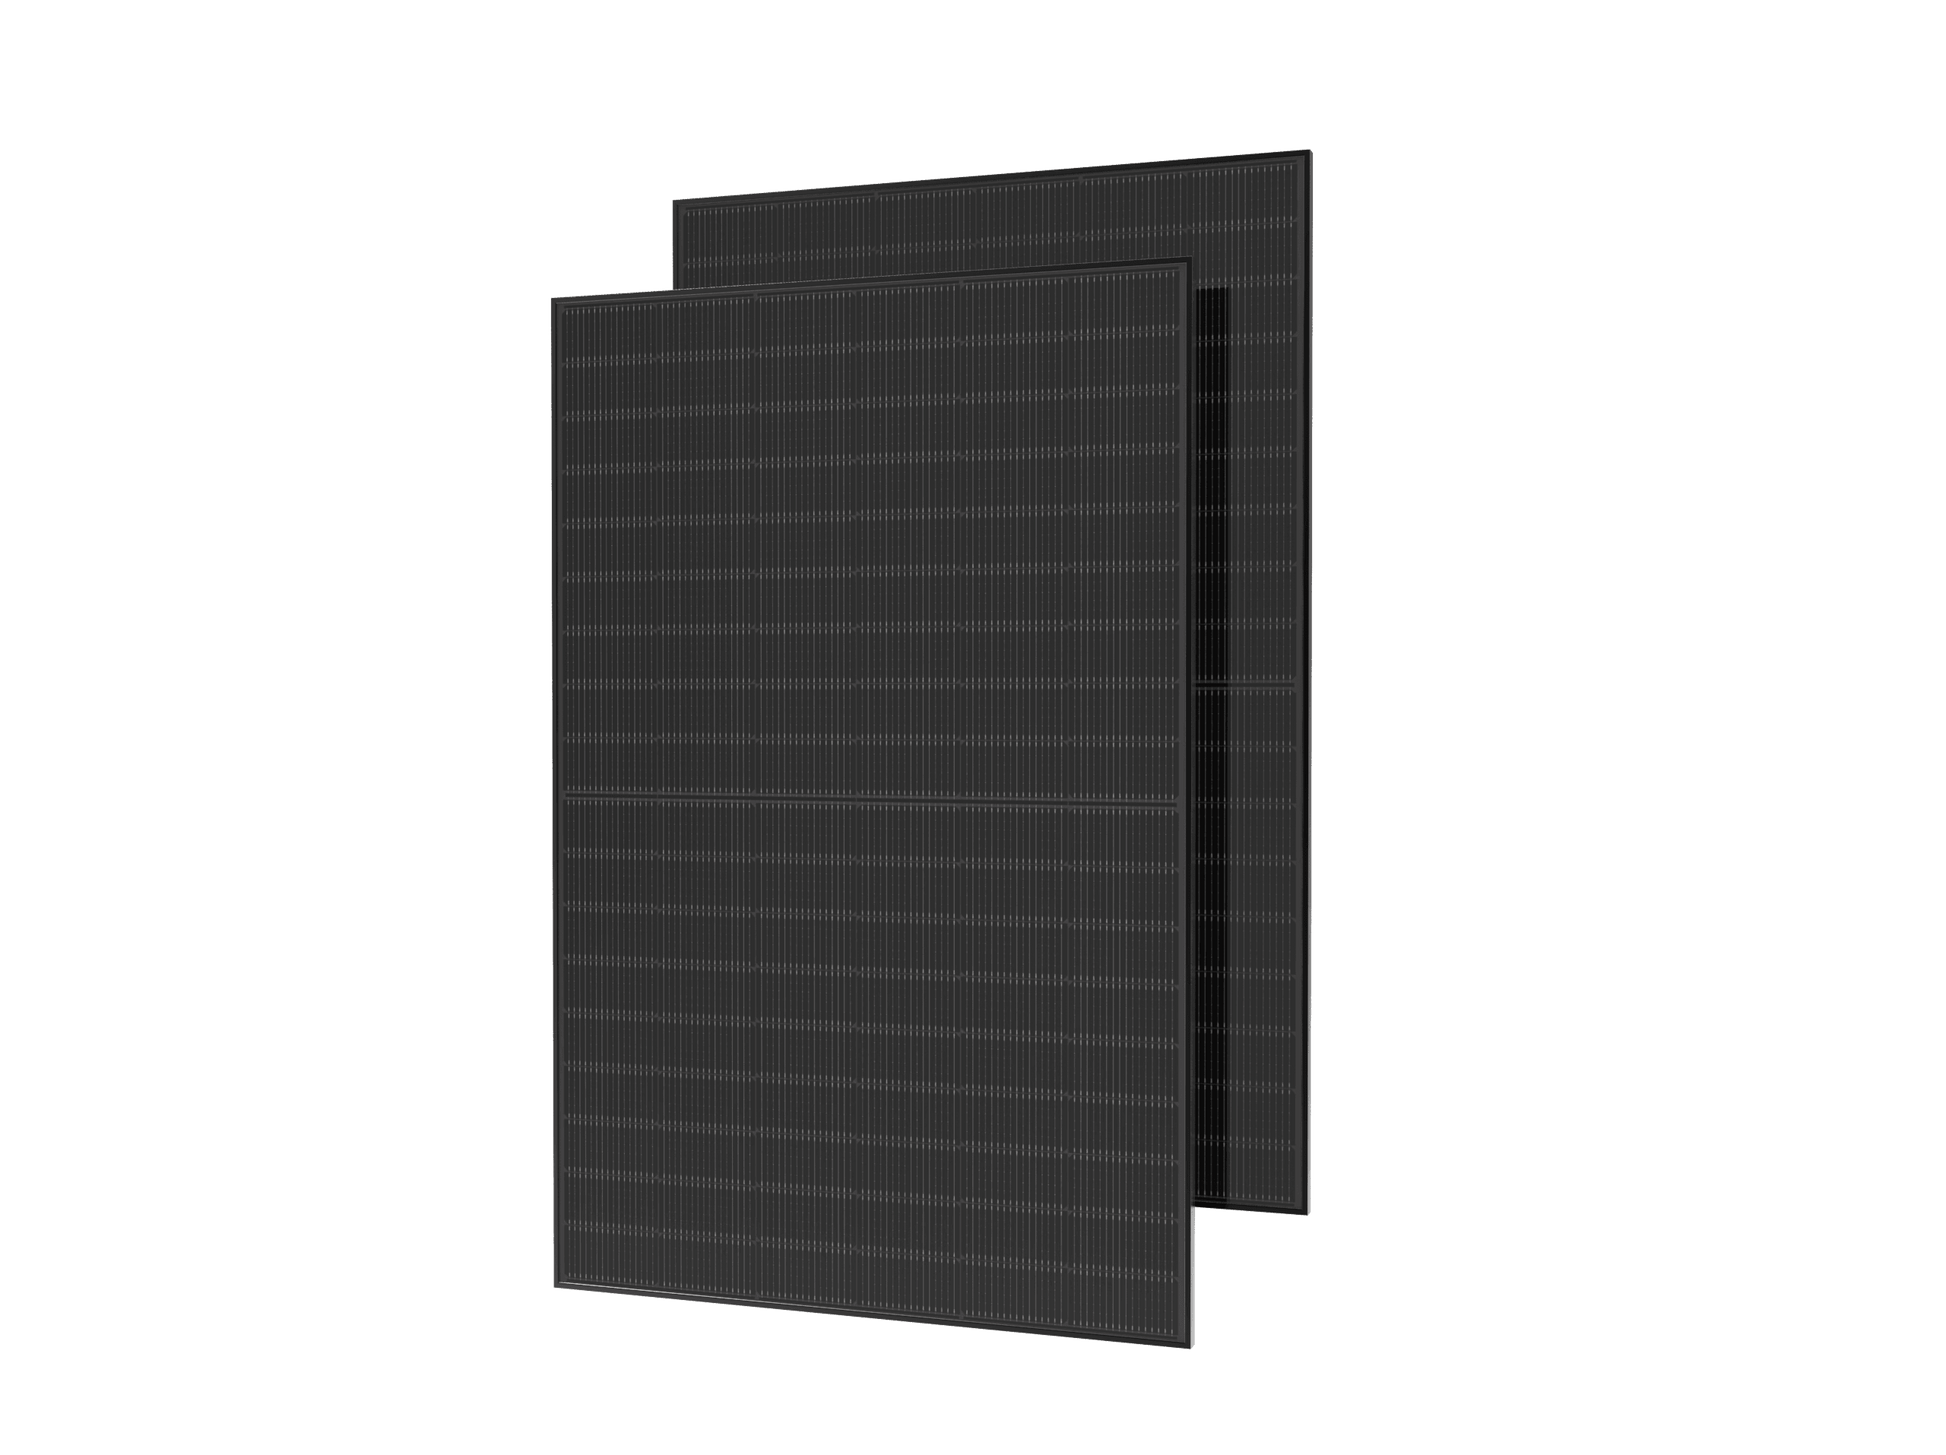 SLENERGY - SL-108PA - 405 Watt - Full Black - Solarplatten24.de